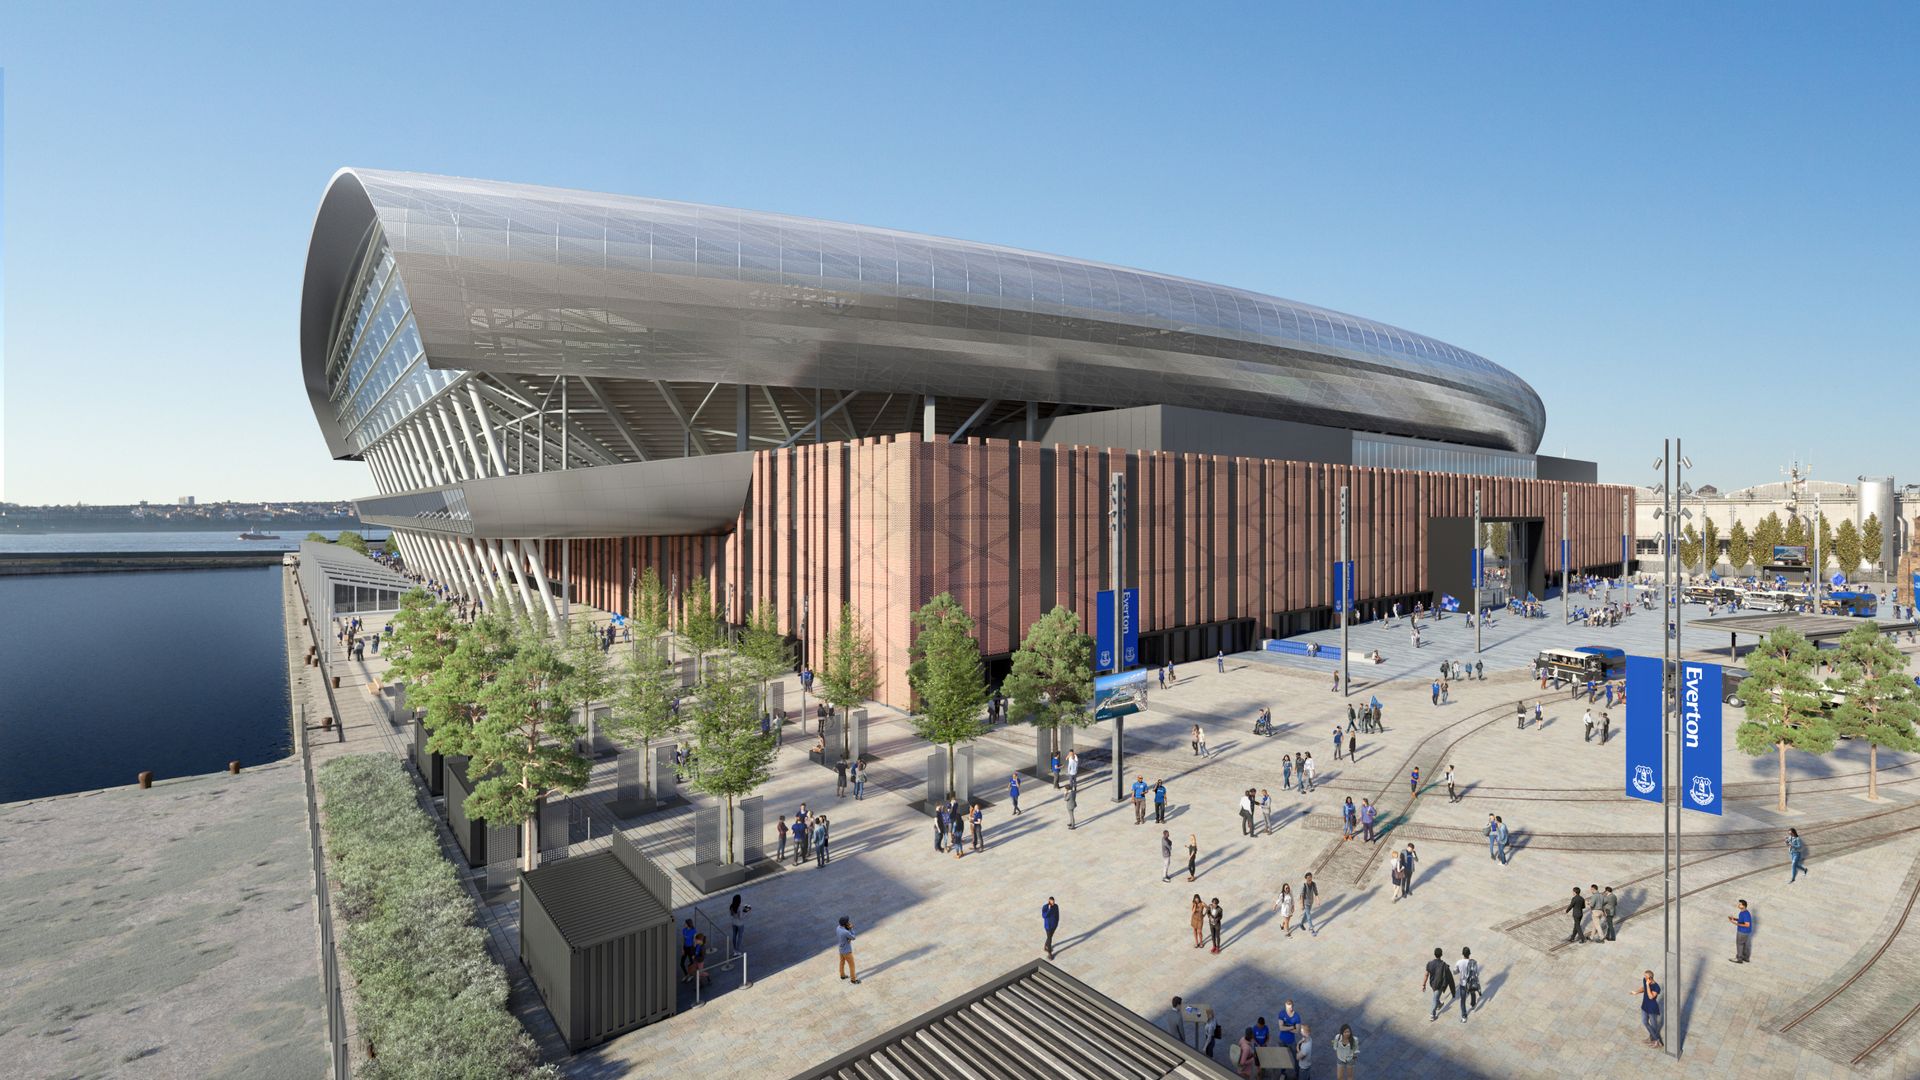 Everton stress focus on heritage as stadium work begins